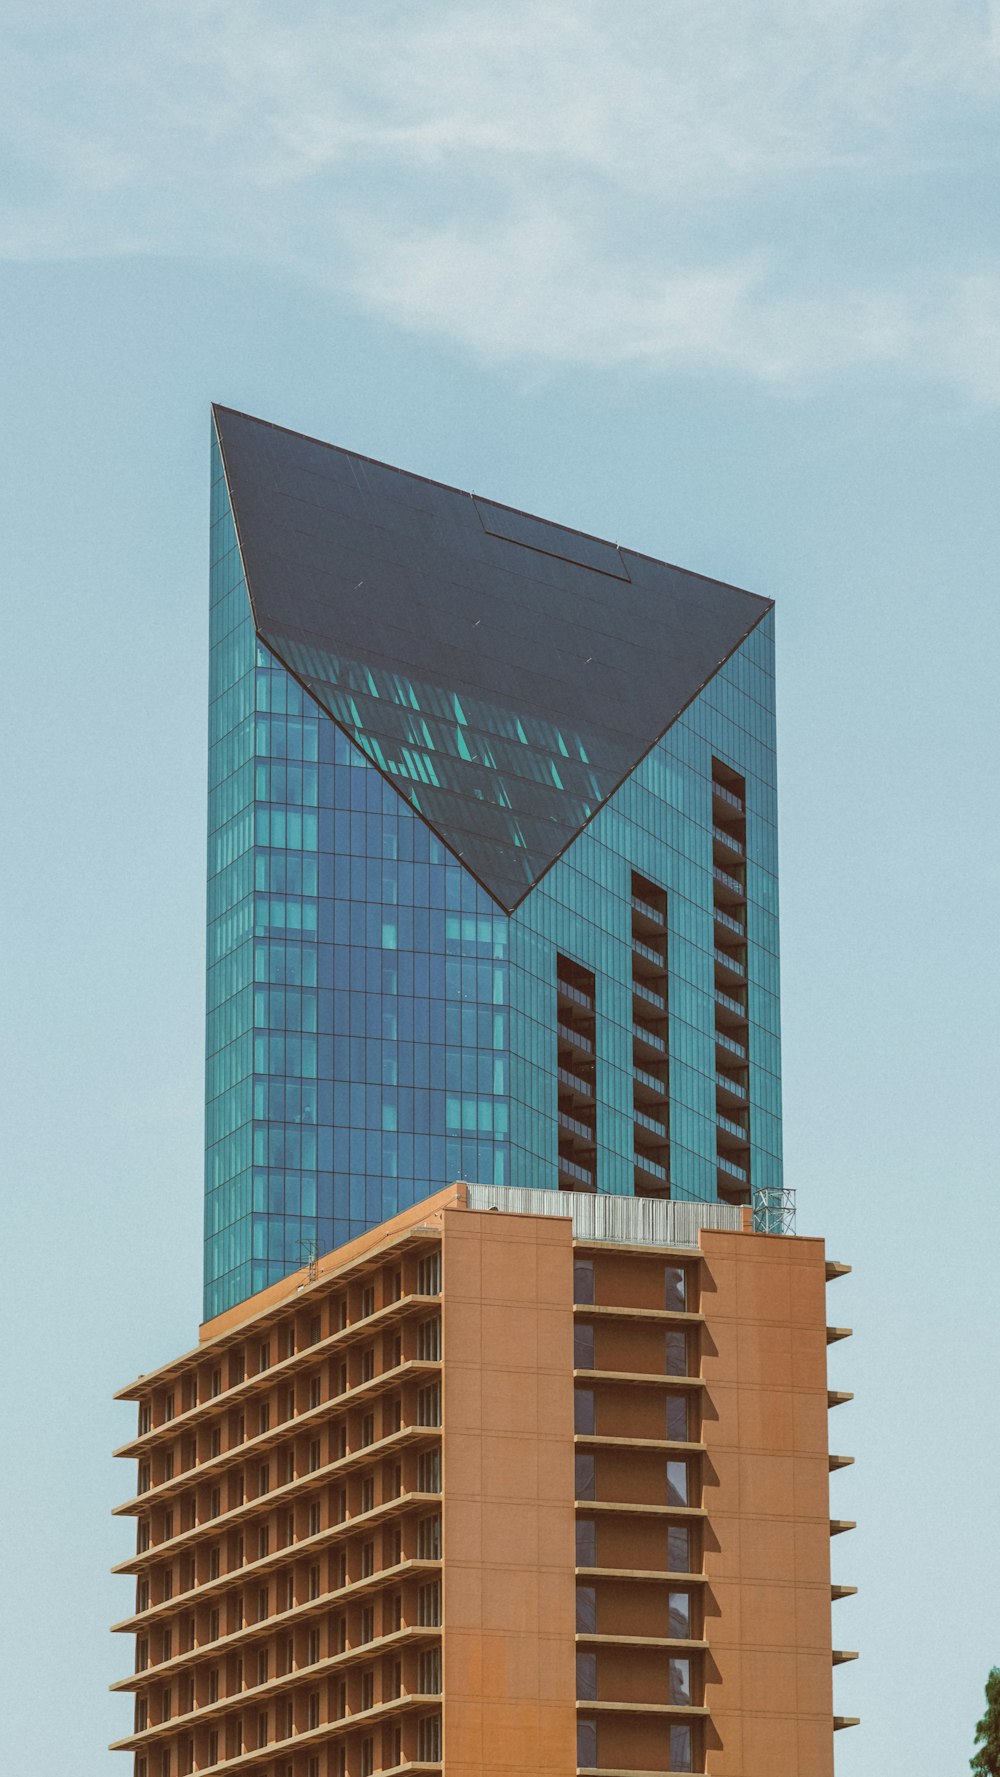 Un edificio alto con un techo de forma triangular